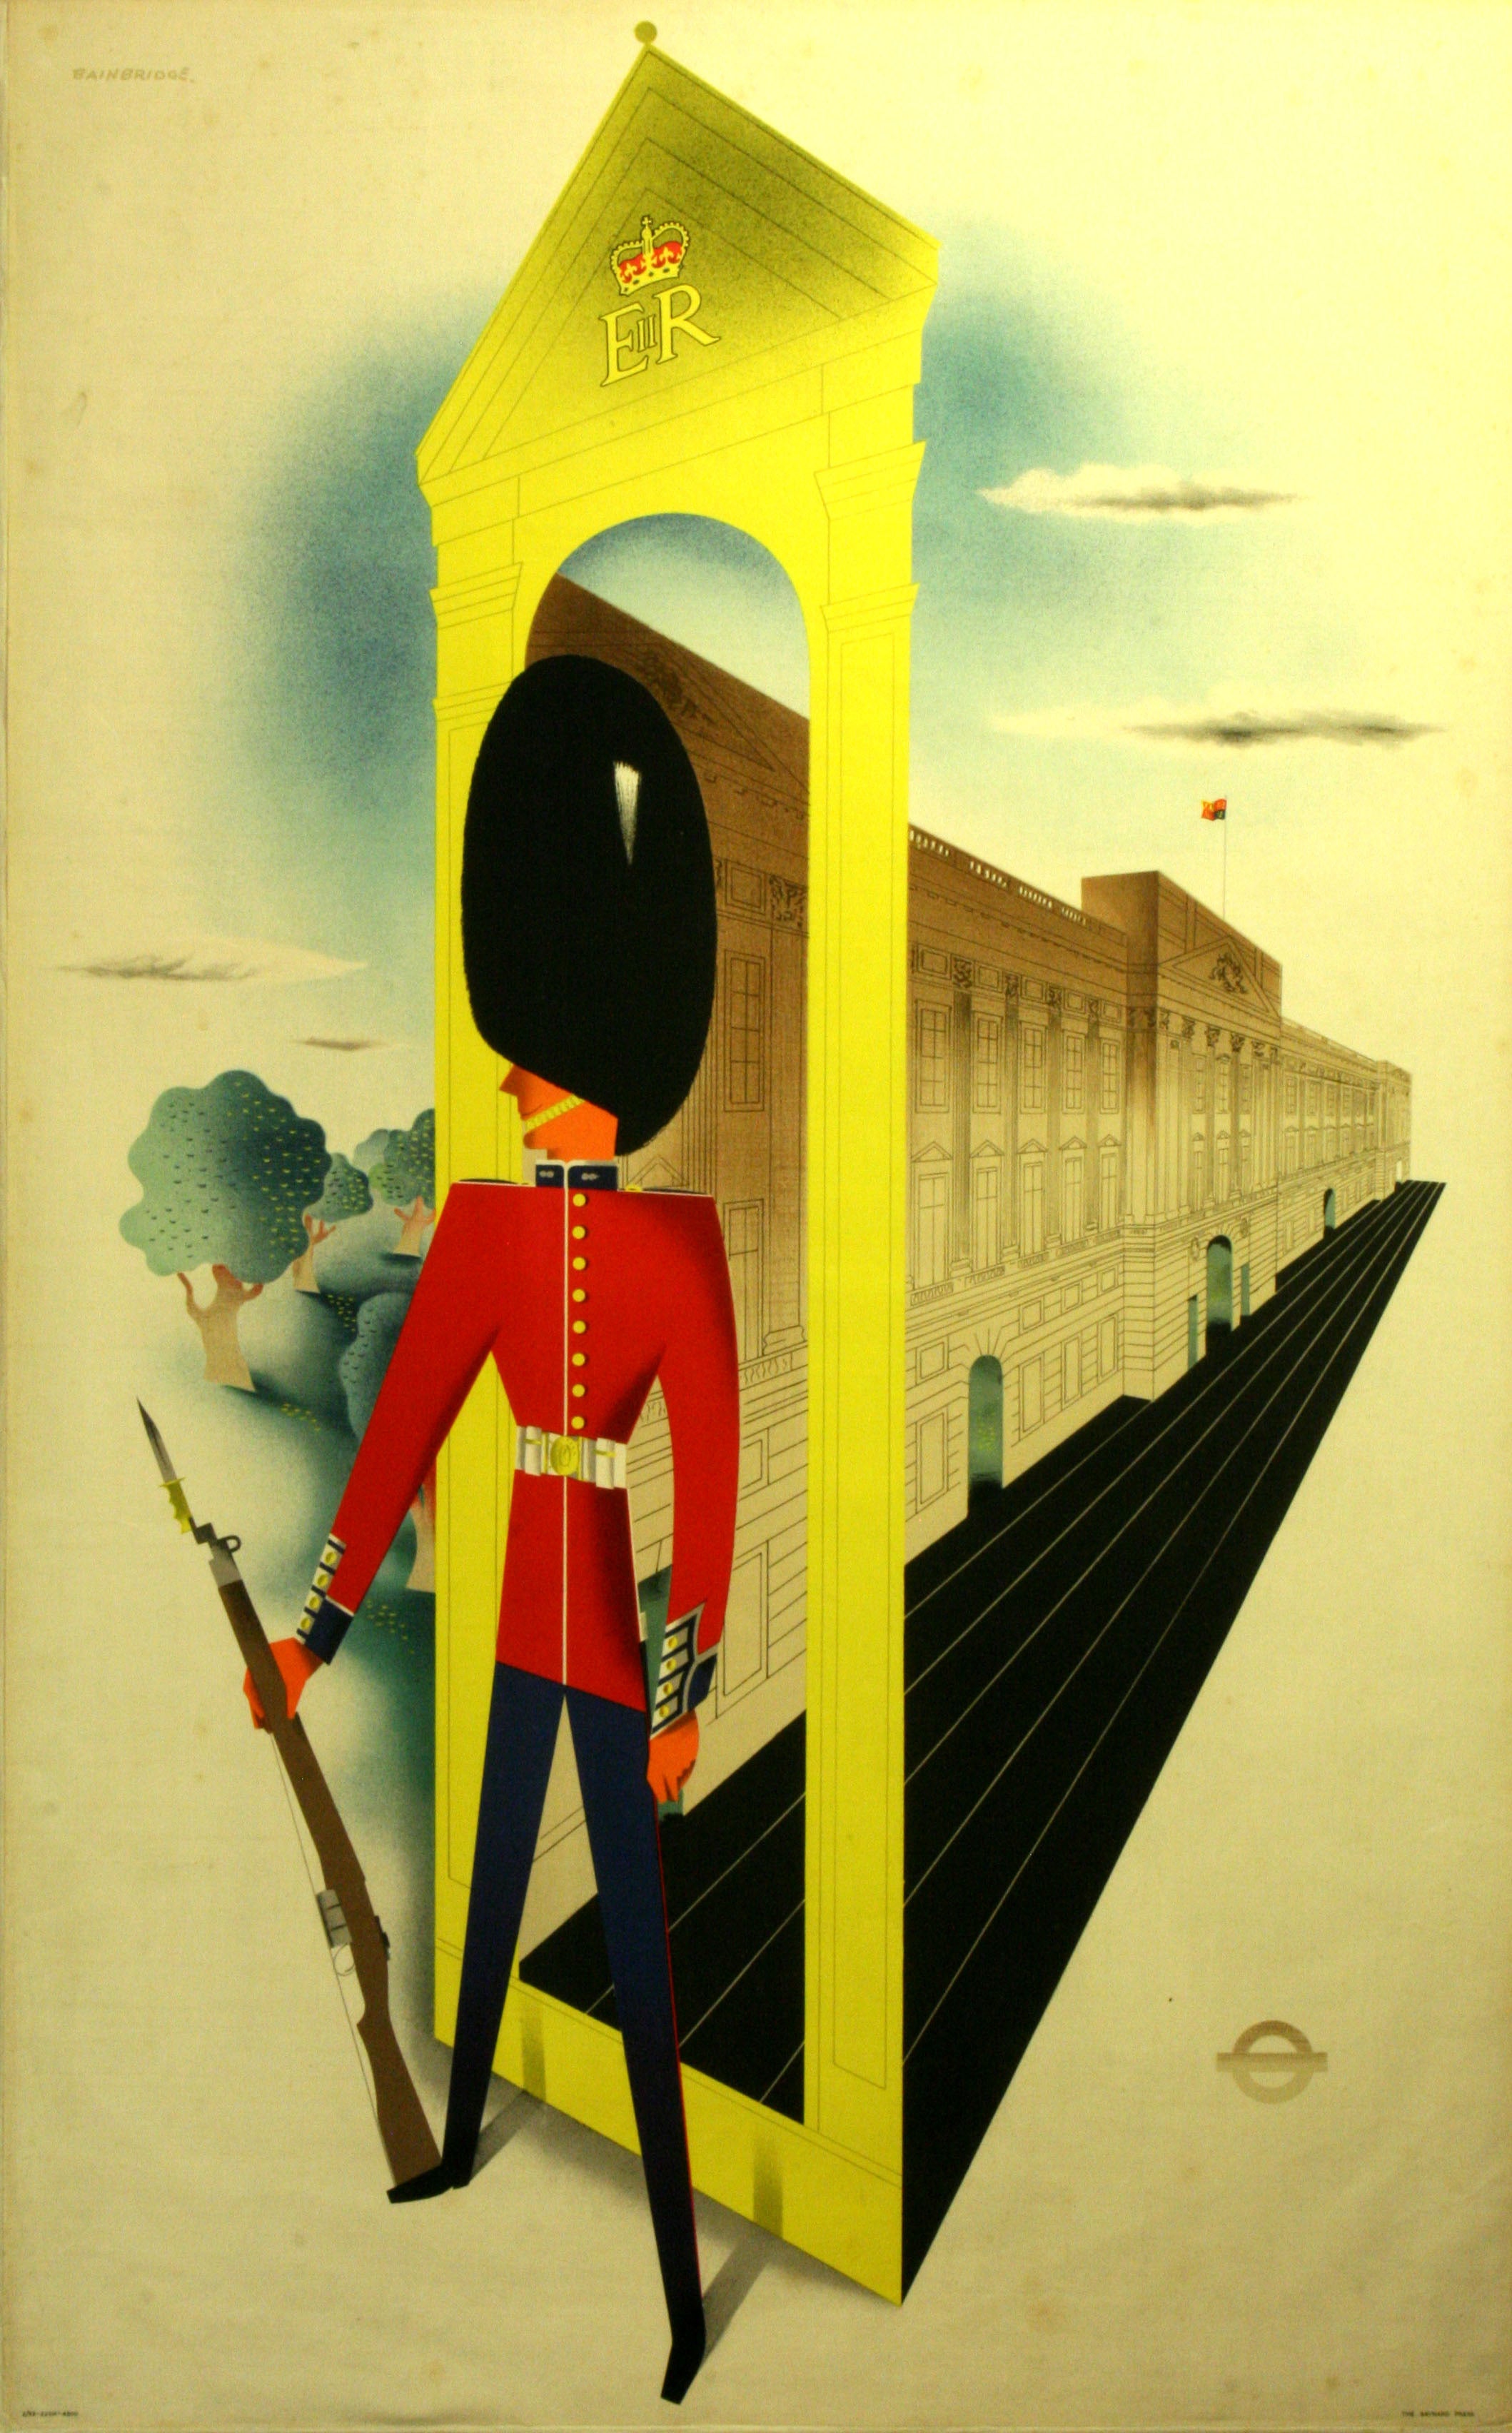 Original Travel Poster for London Underground, Buckingham Palace